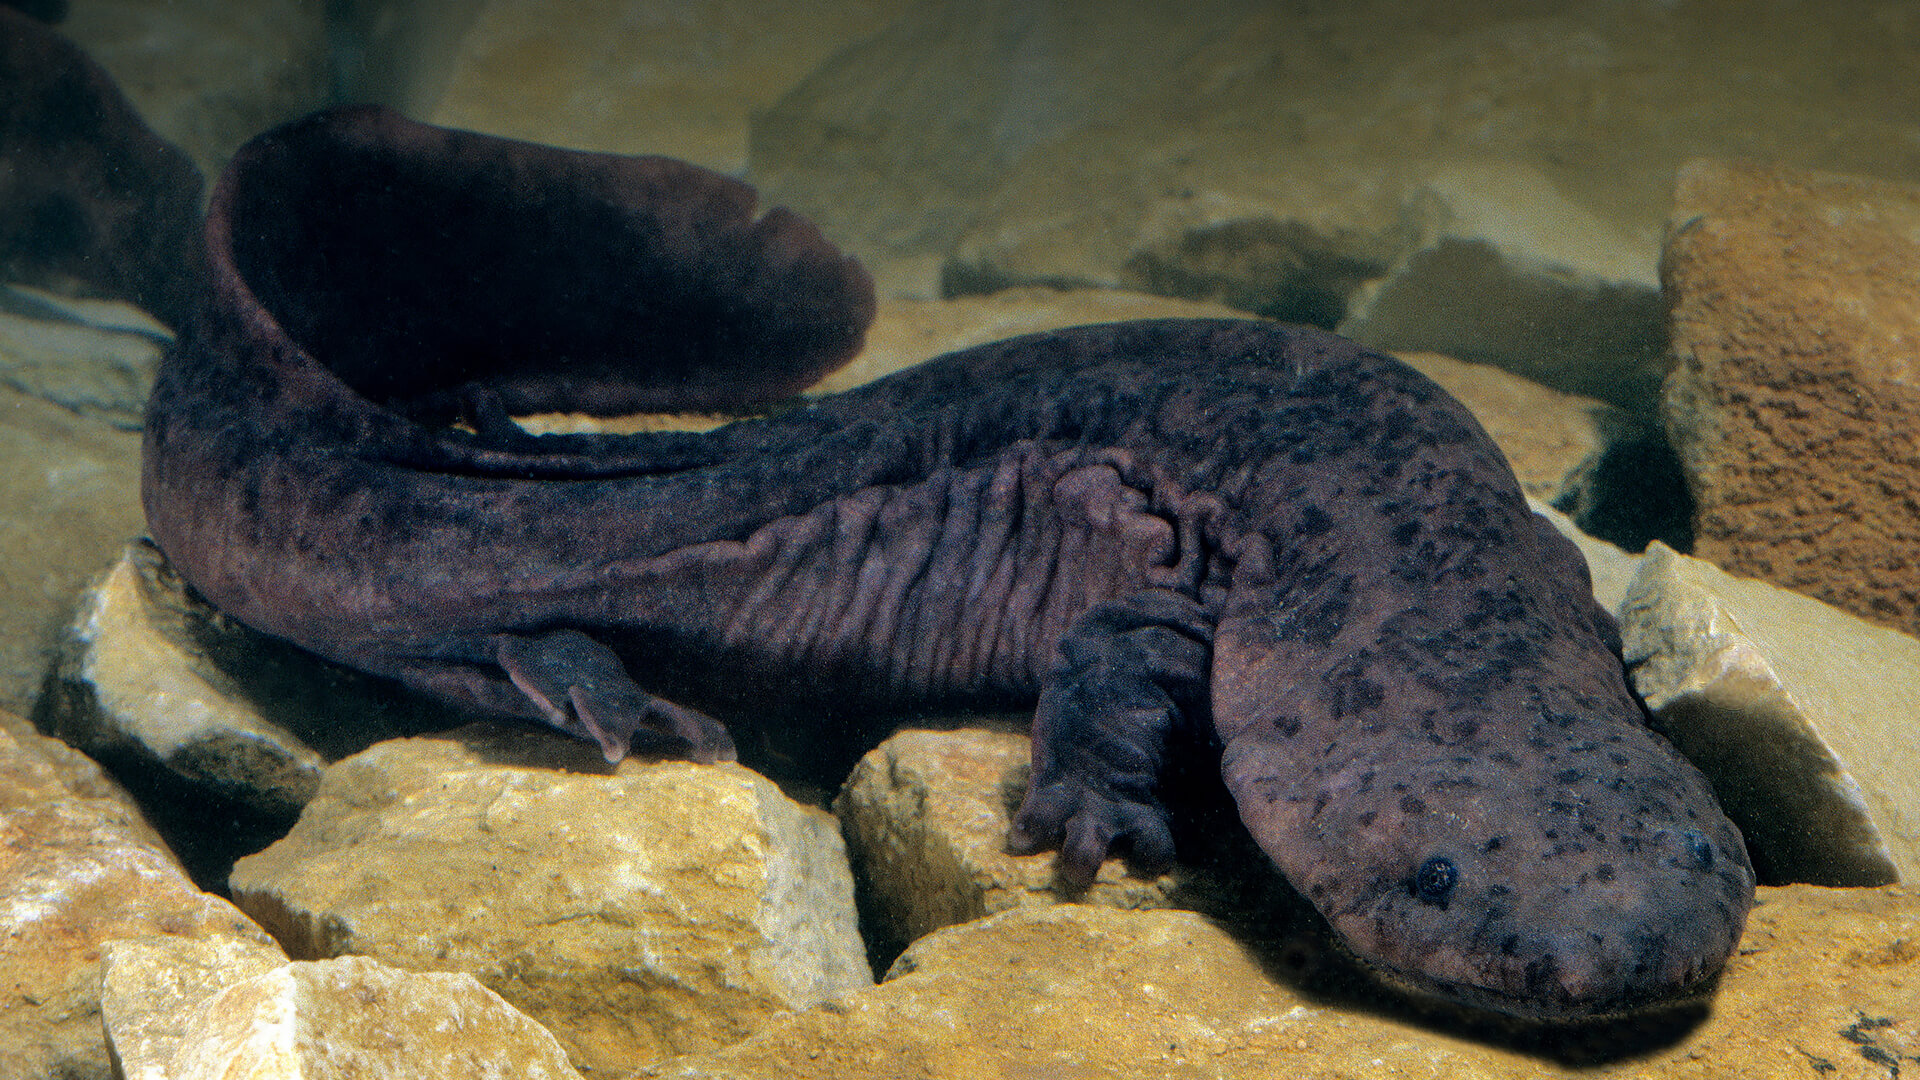 Giant Chinese salamander. Photo: San Diego Zoo